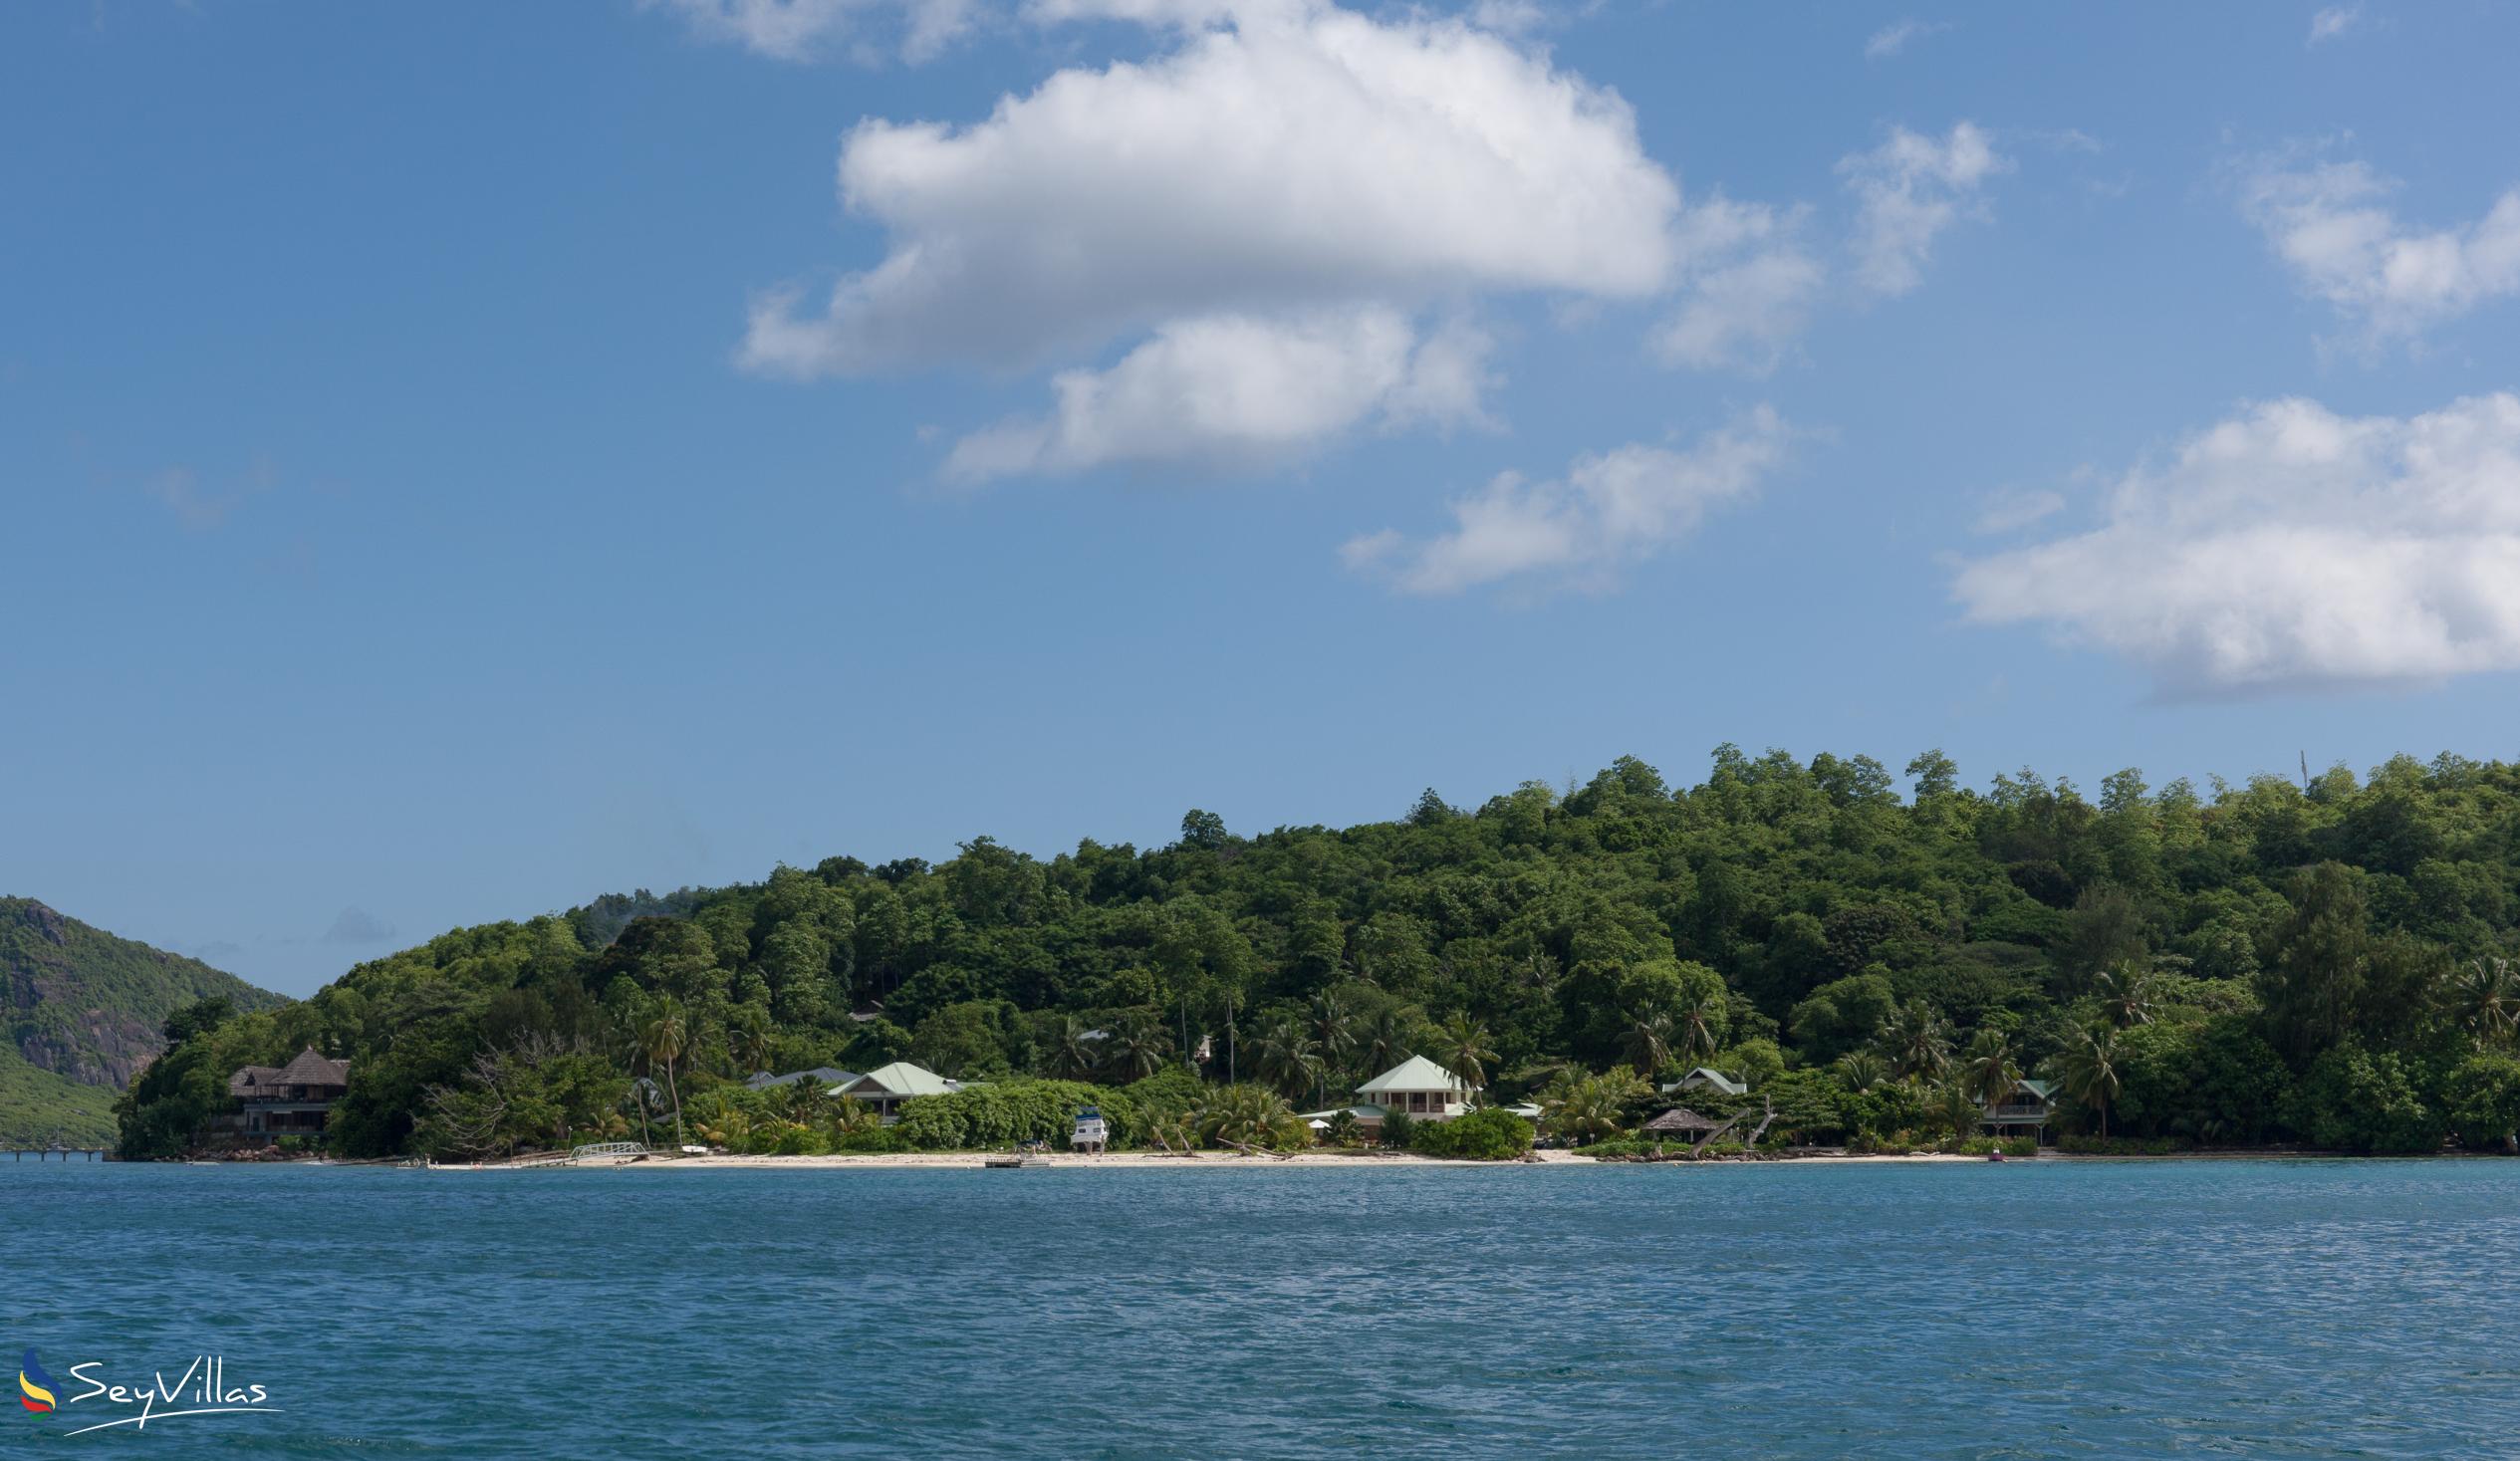 Foto 15: Villa de Cerf - Lage - Cerf Island (Seychellen)